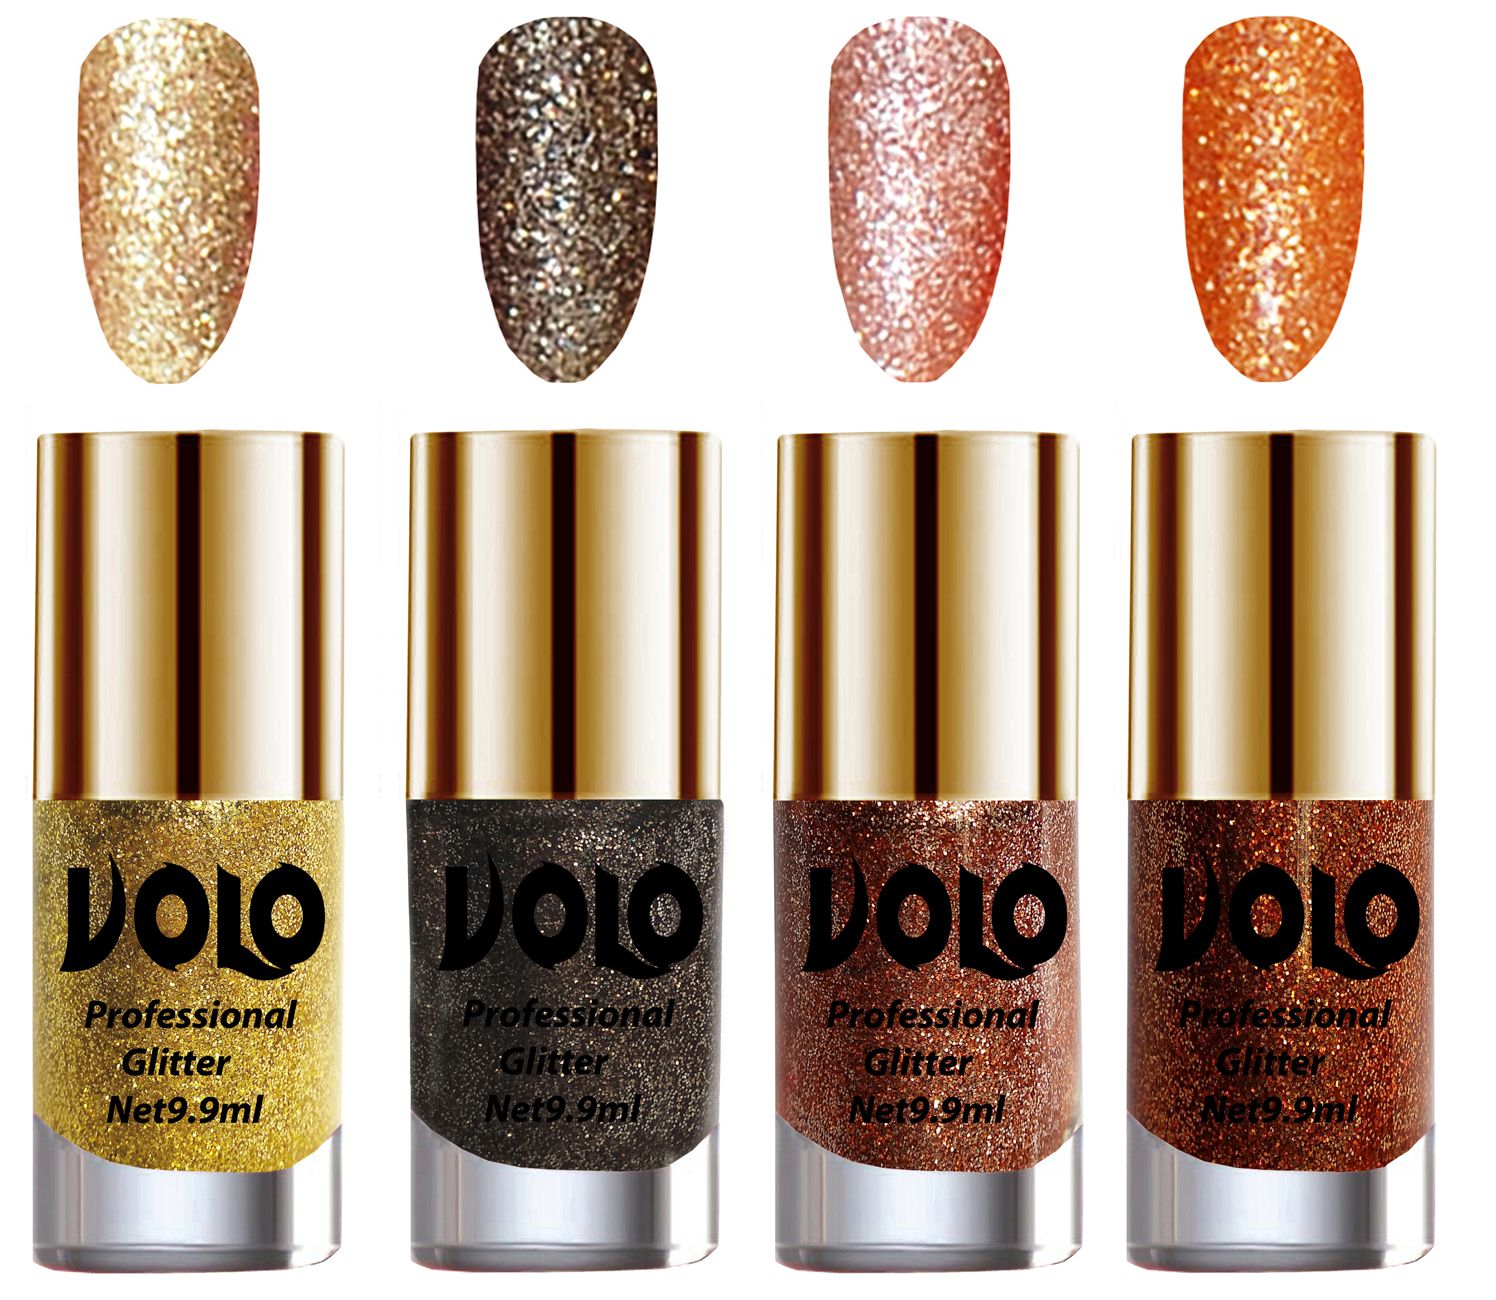     			VOLO Professionally Used Glitter Shine Nail Polish Gold,Grey,Peach Orange Pack of 4 39 mL